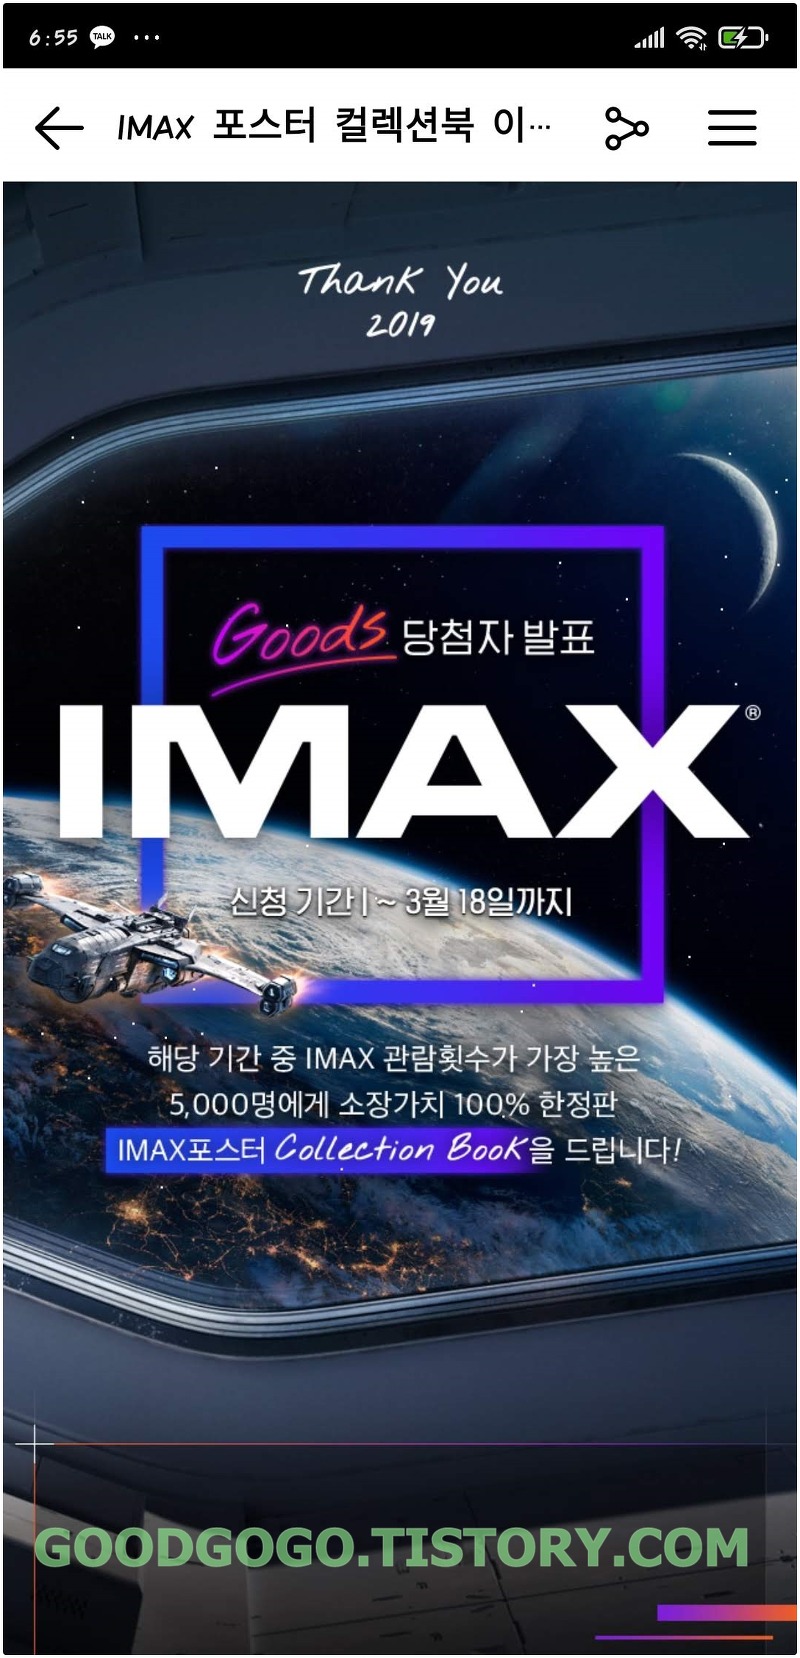 CGV - IMAX 포스터 컬렉션북 당첨~